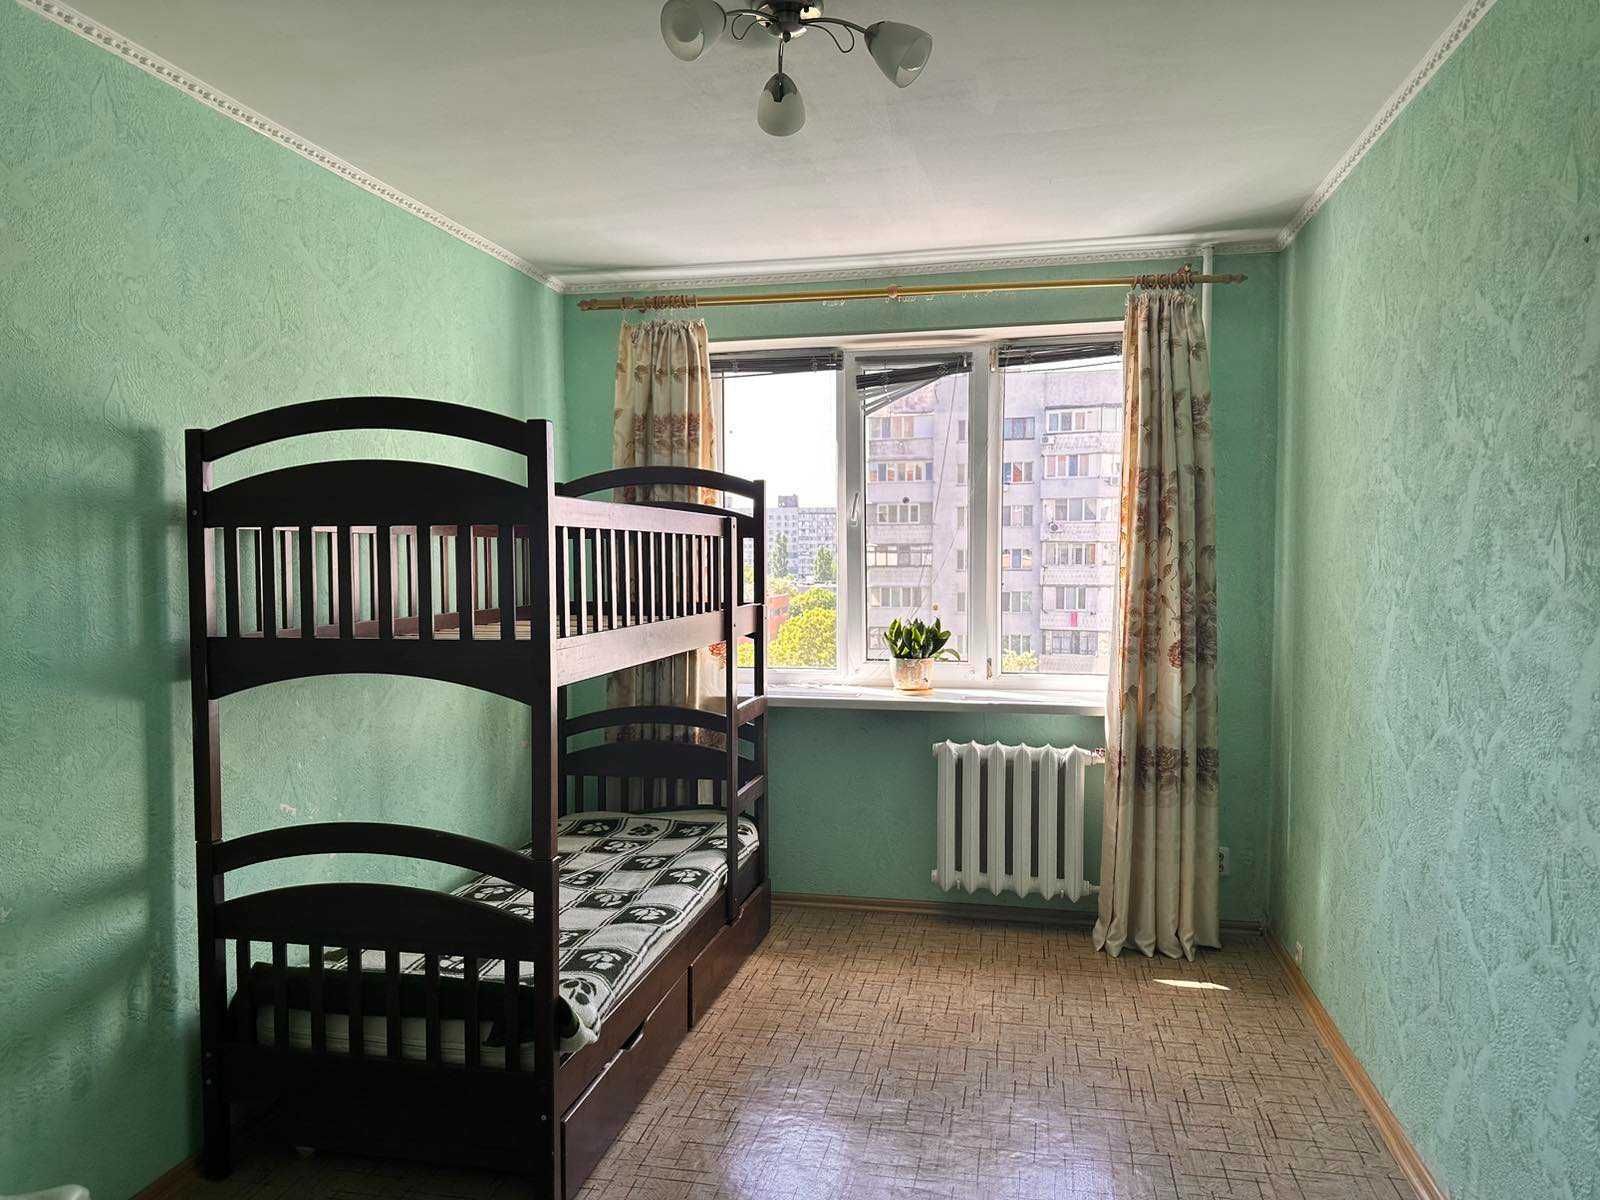 Продам 2 комн квартиру на Сахарова  в кирпичном доме